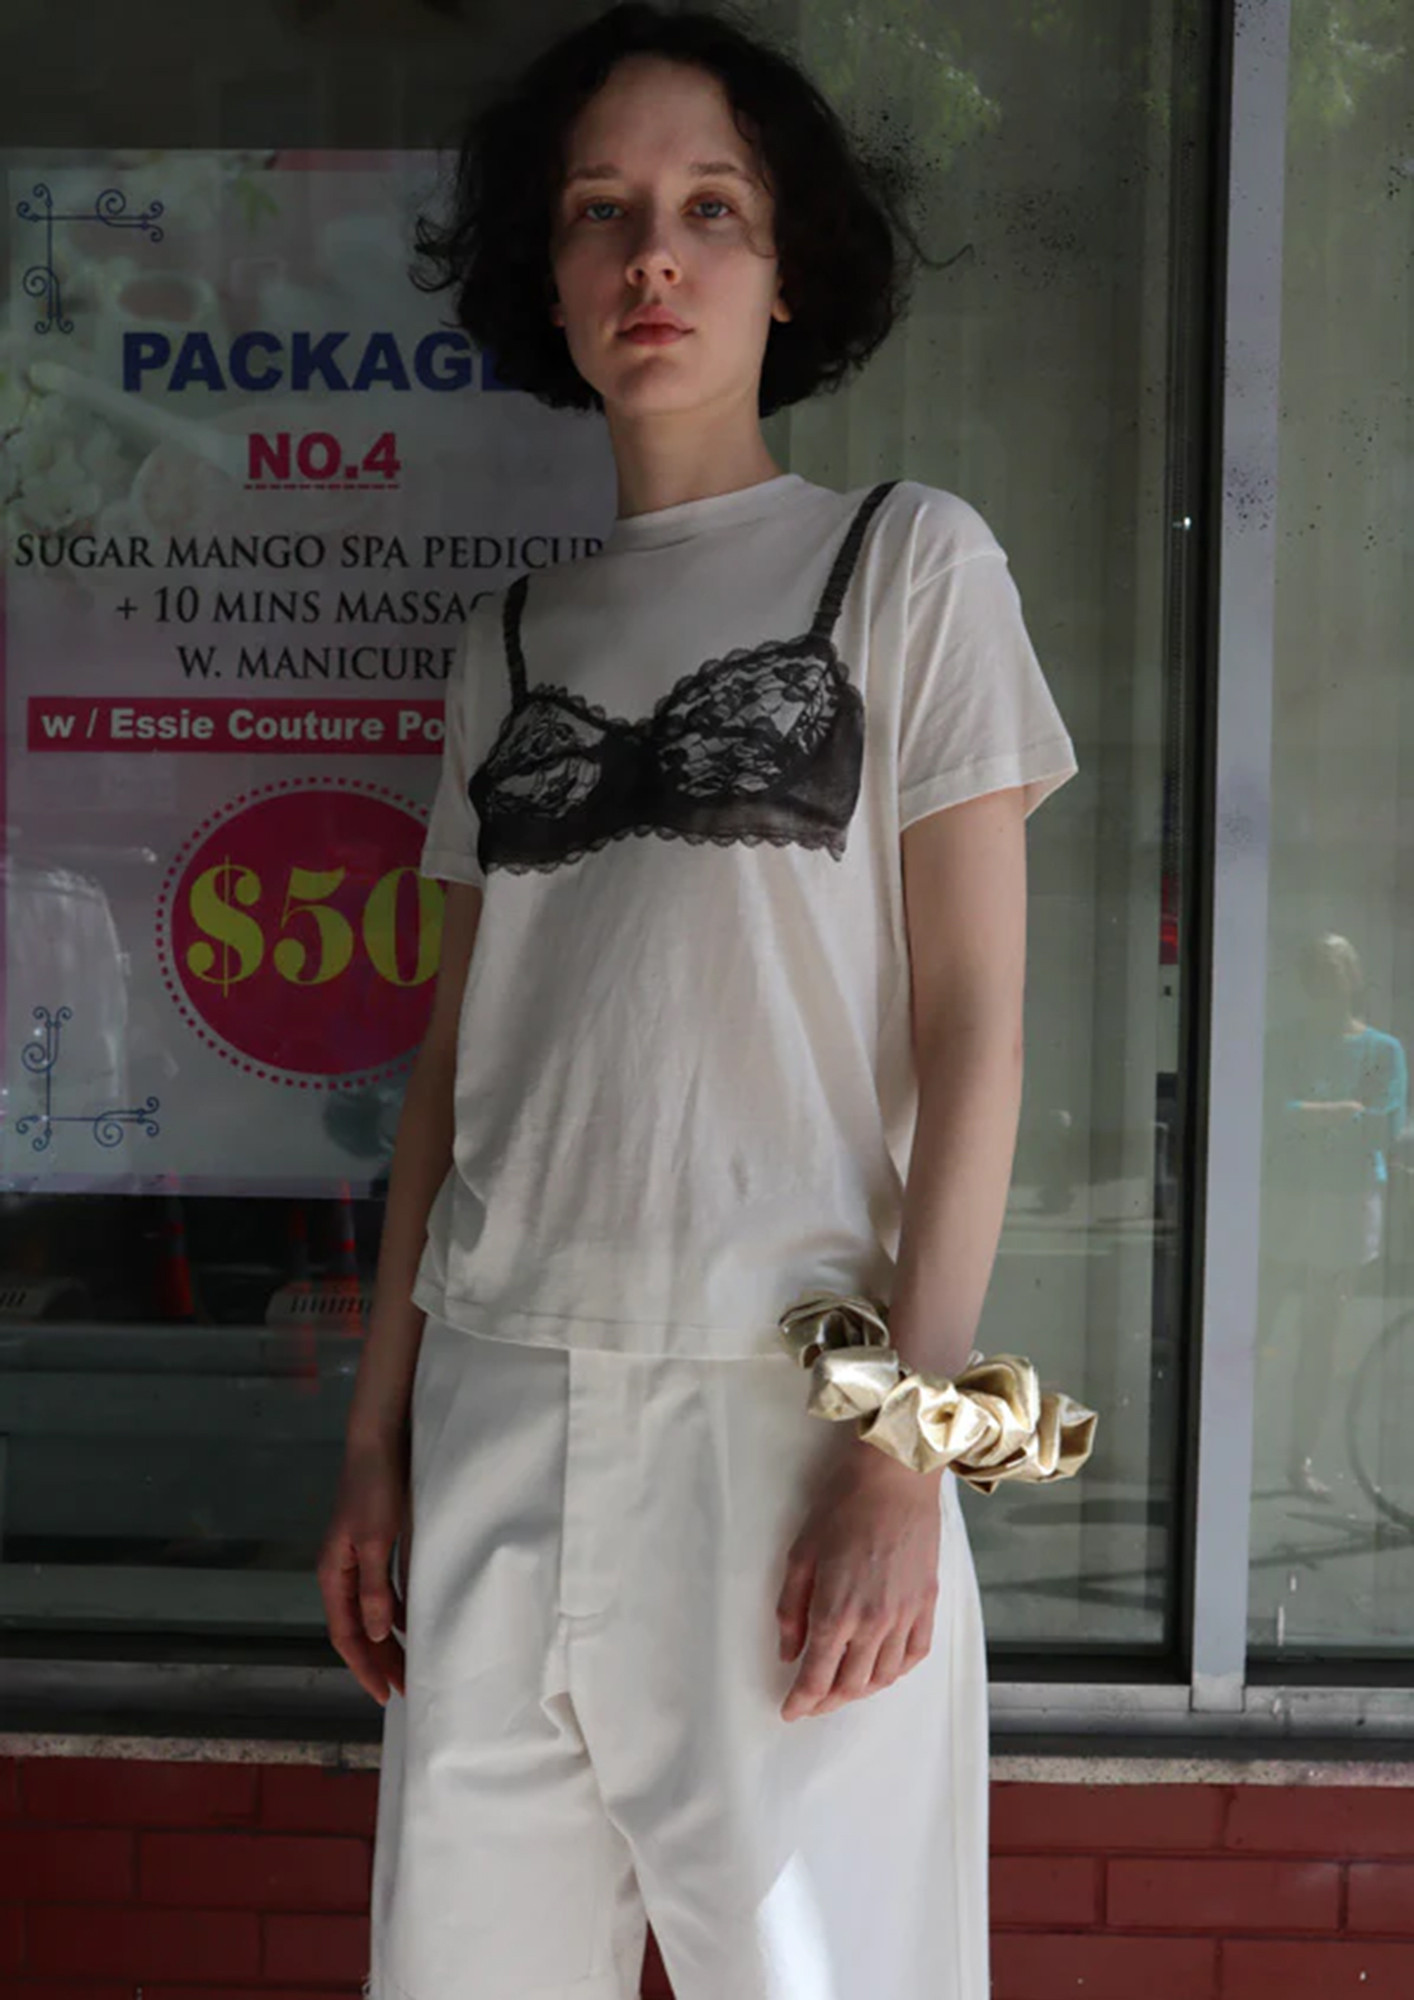 Vaquera - Women's Bra T-Shirt - (White)